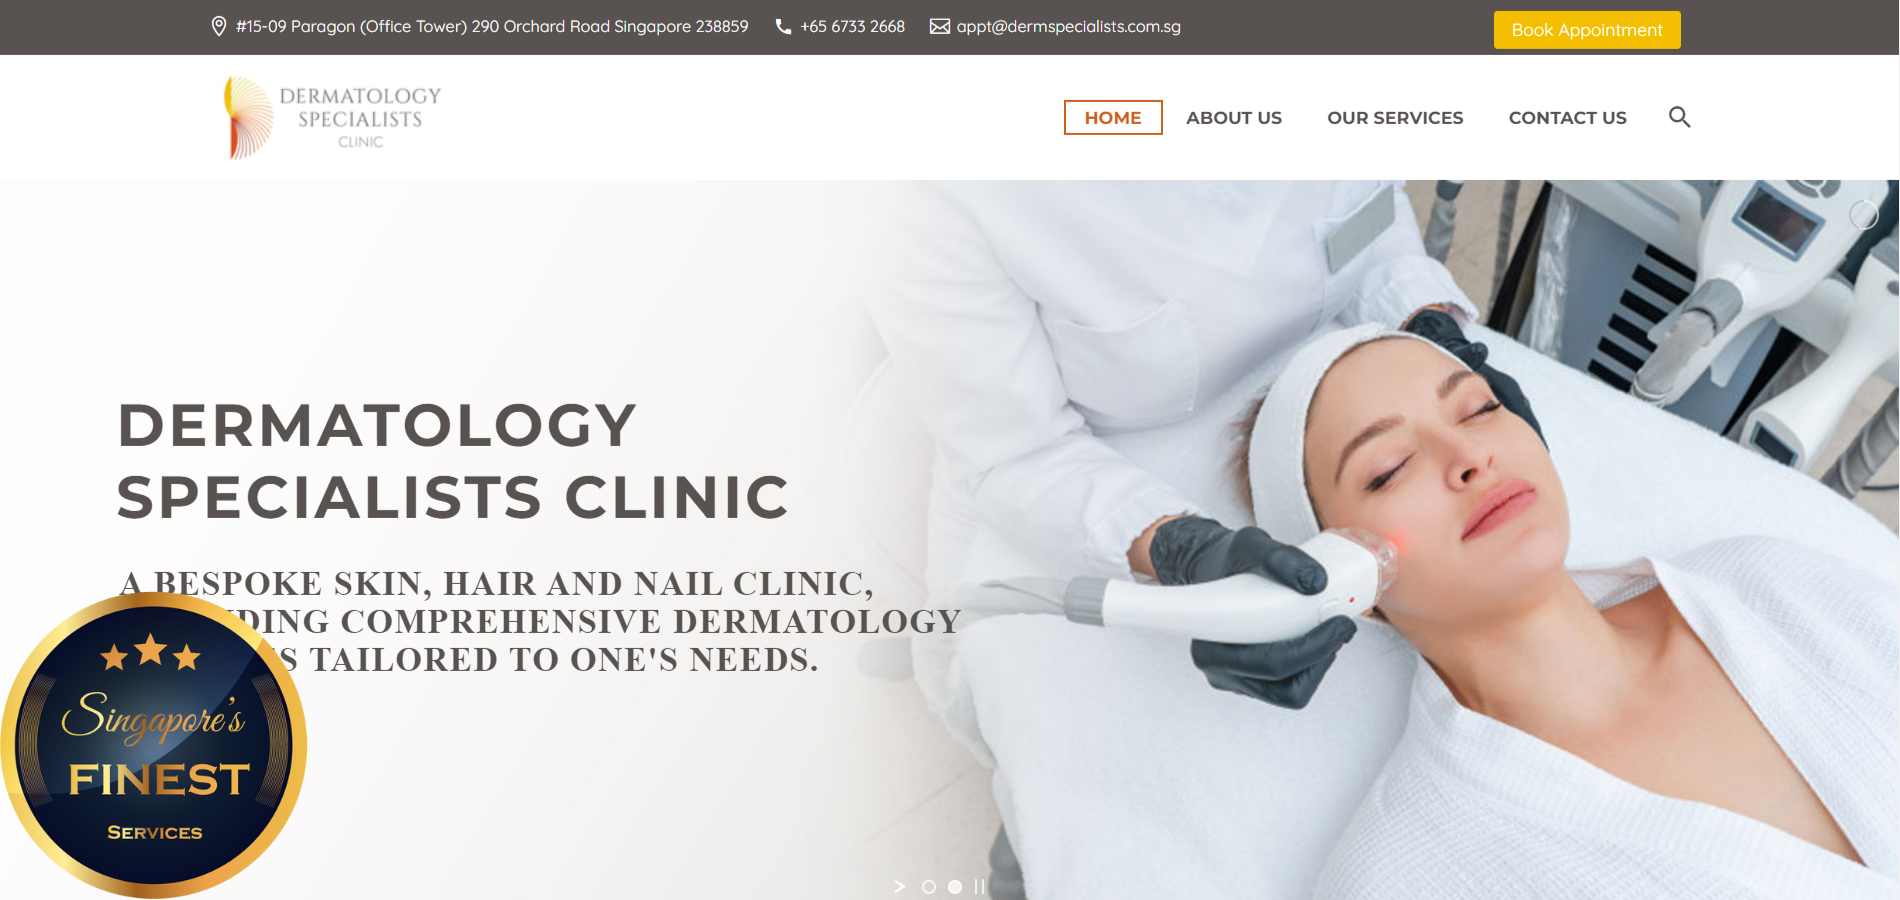 The Finest Dermatologist Clinics in Singapore